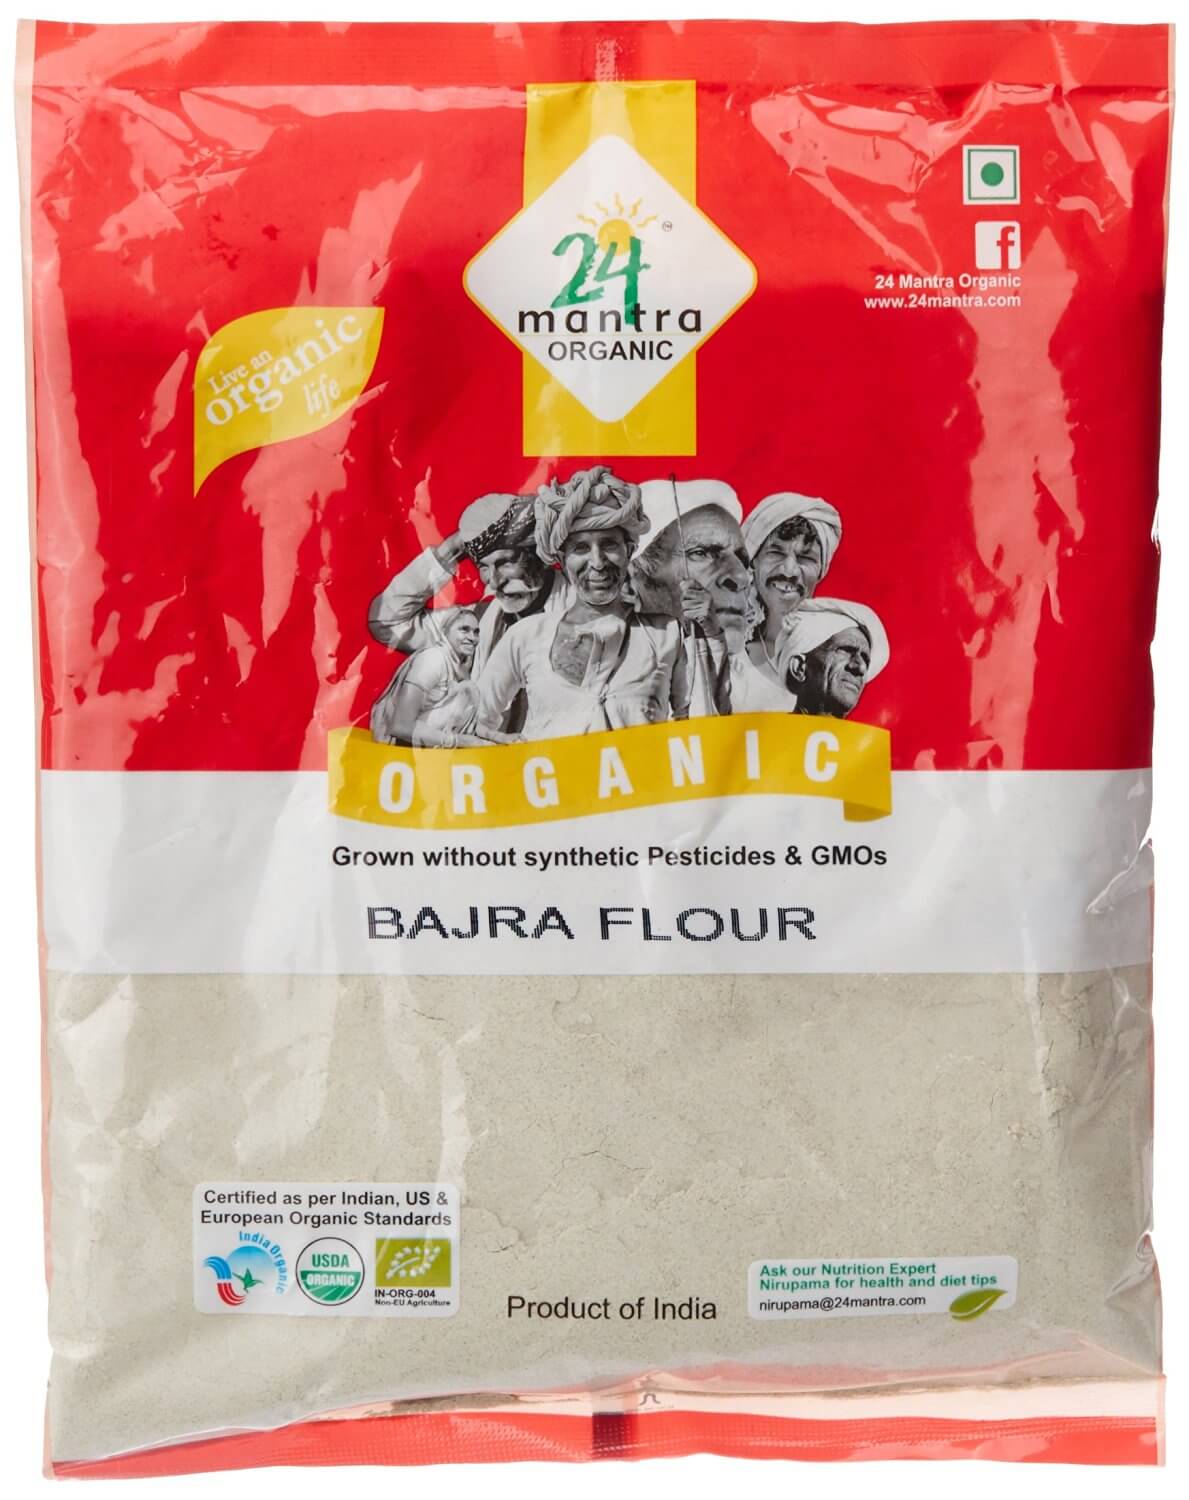 24 Mantra Organic Bajra PearlMillet Flour 500g VizagShop.com